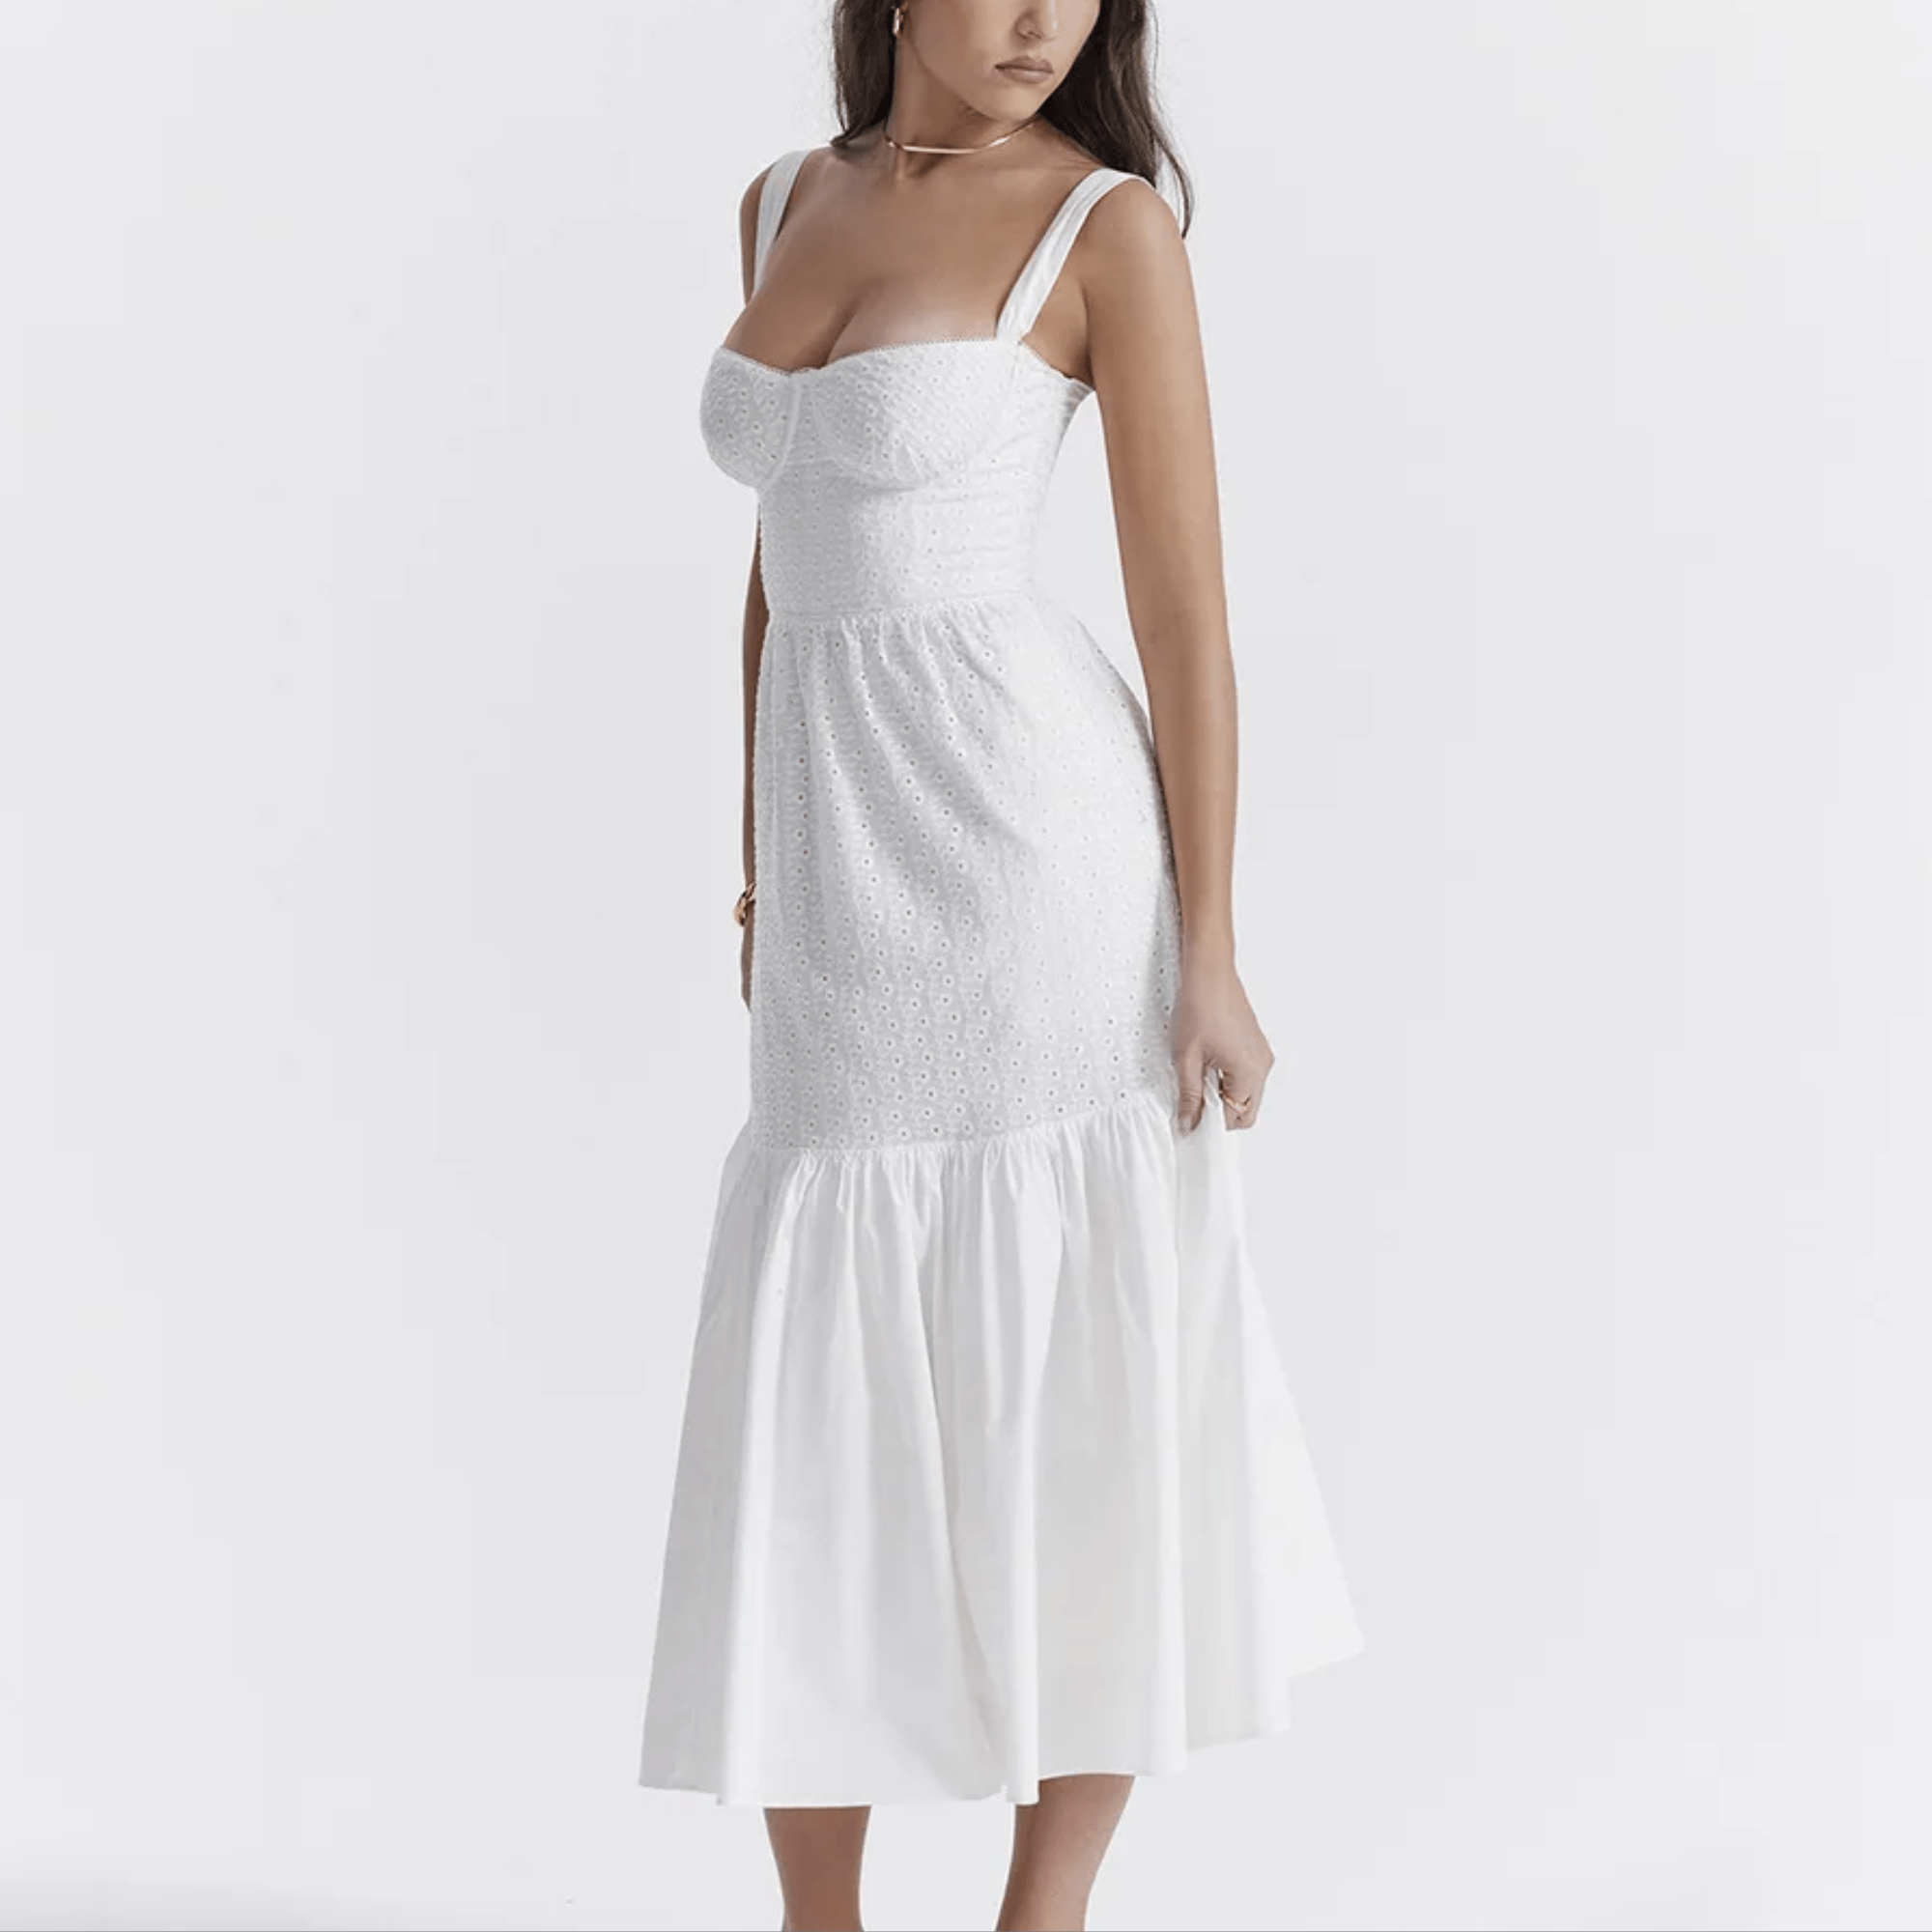 Amoura - White Midi Embroidery Summer Dress - Model Mannequin